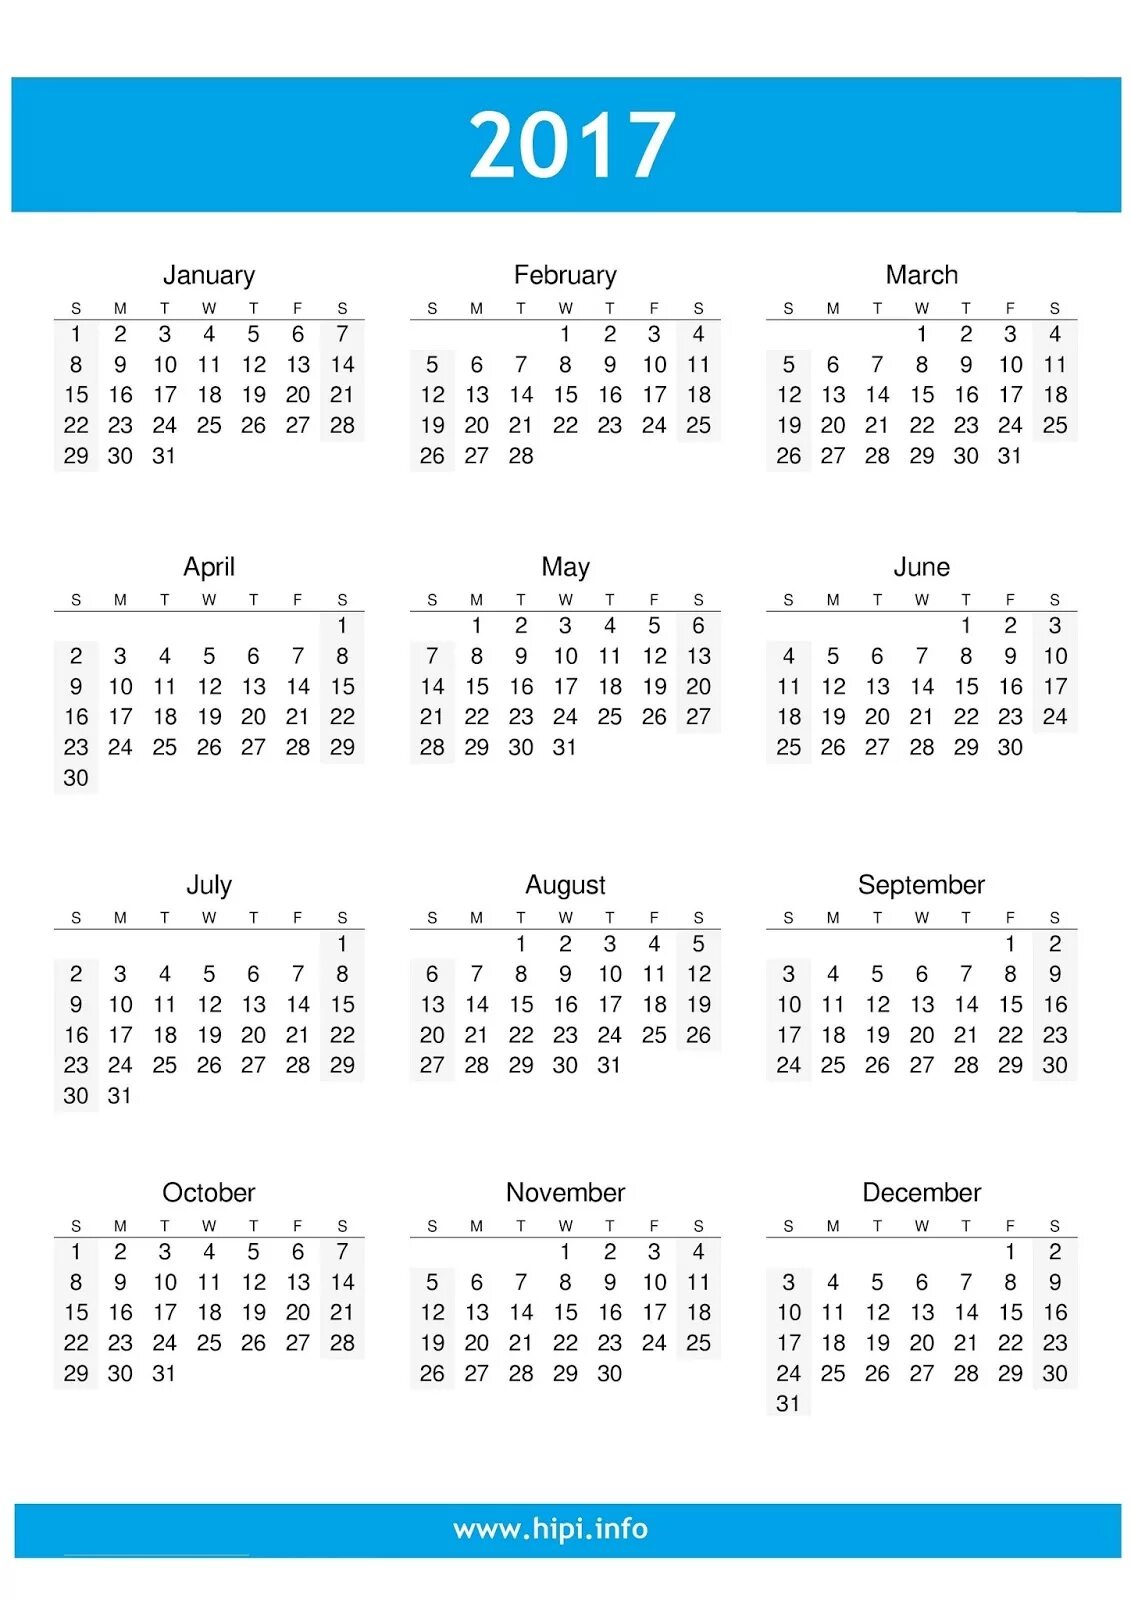 Календарь 2017. Календарь 2017г. Календарь 2017 календарь. Календарь 2017 года по месяцам. Календарь 2017 месяцам